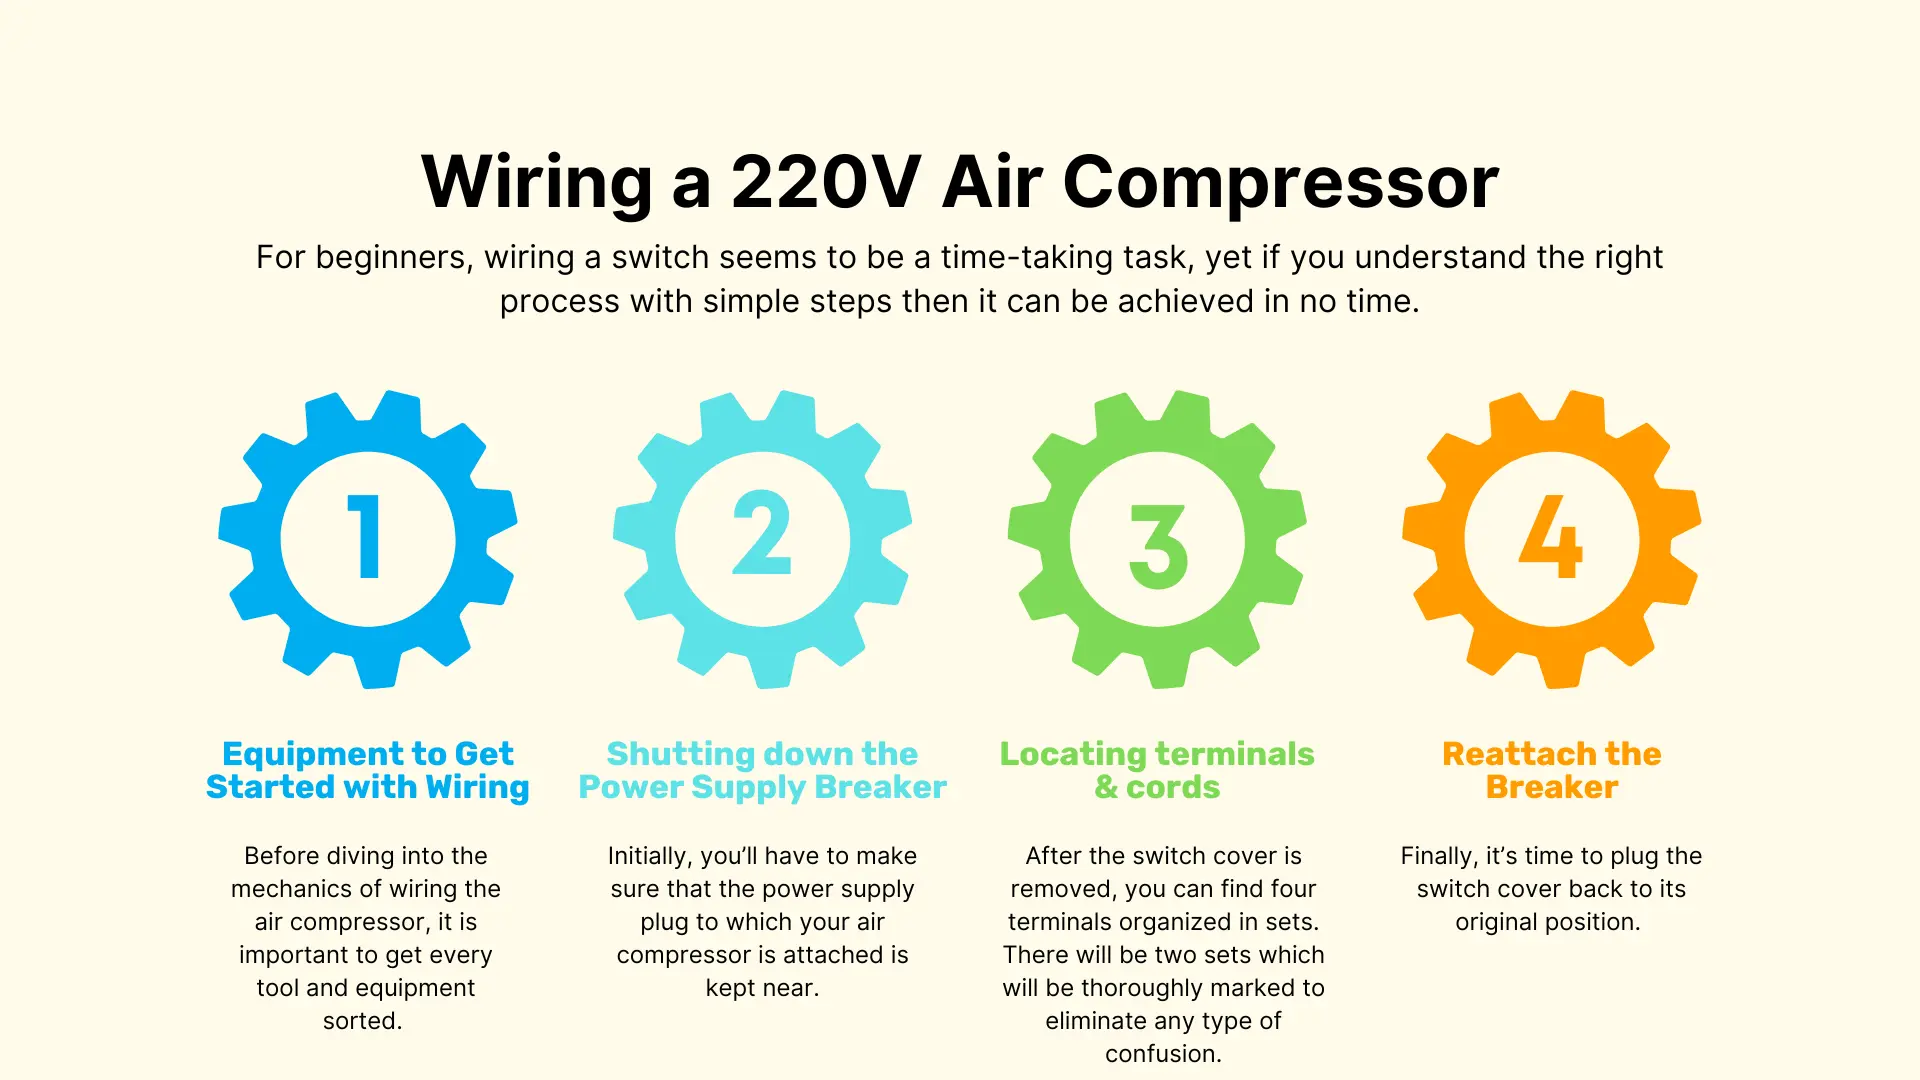 Wiring a 220V Air Compressor